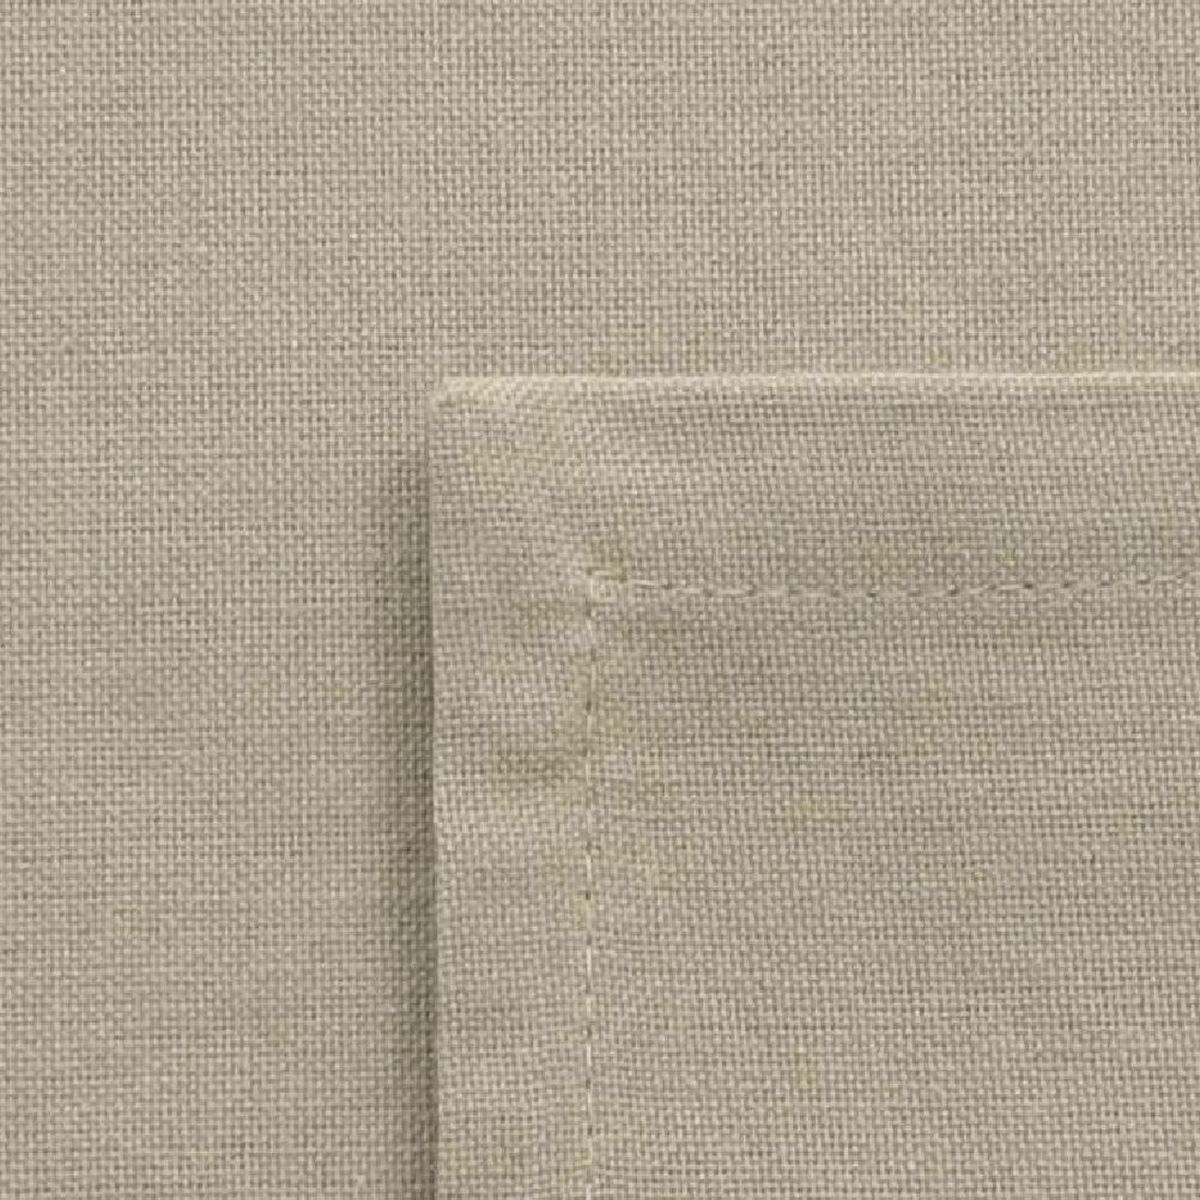 Cotton napkin - sold individually 45 x 45 cm